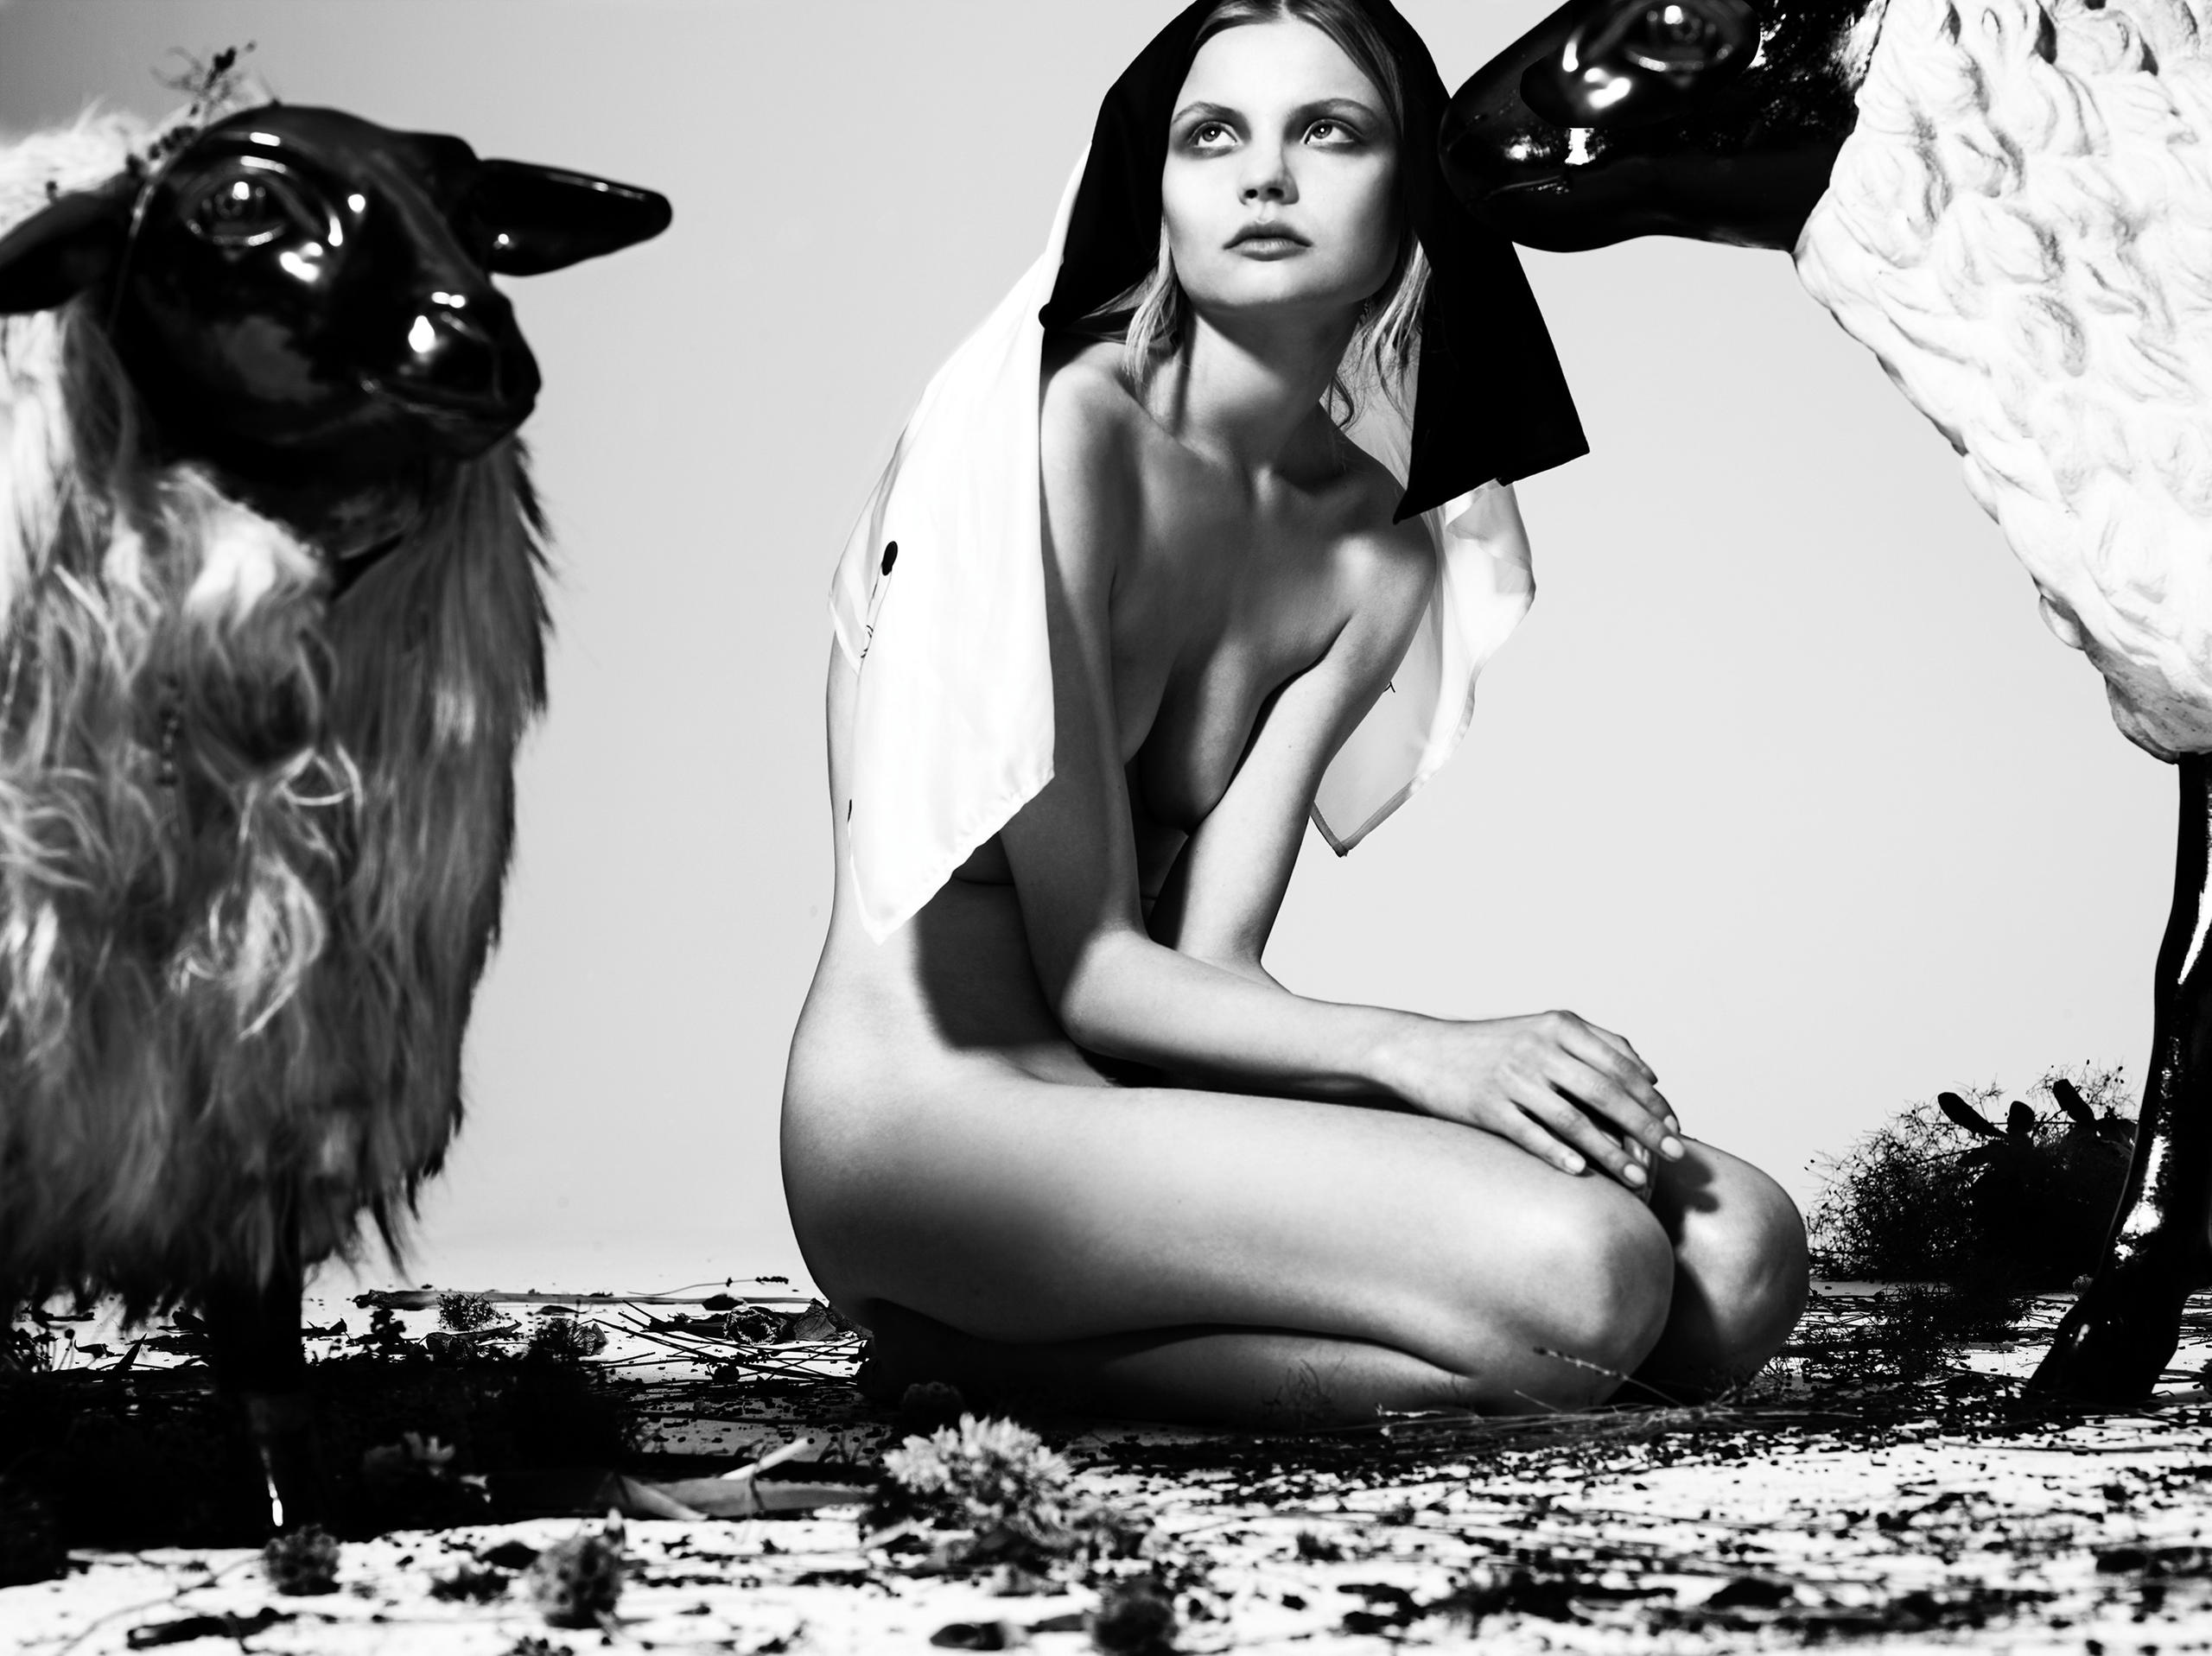 Black and white photo of model Magdalena Frackowiak and two sheeps